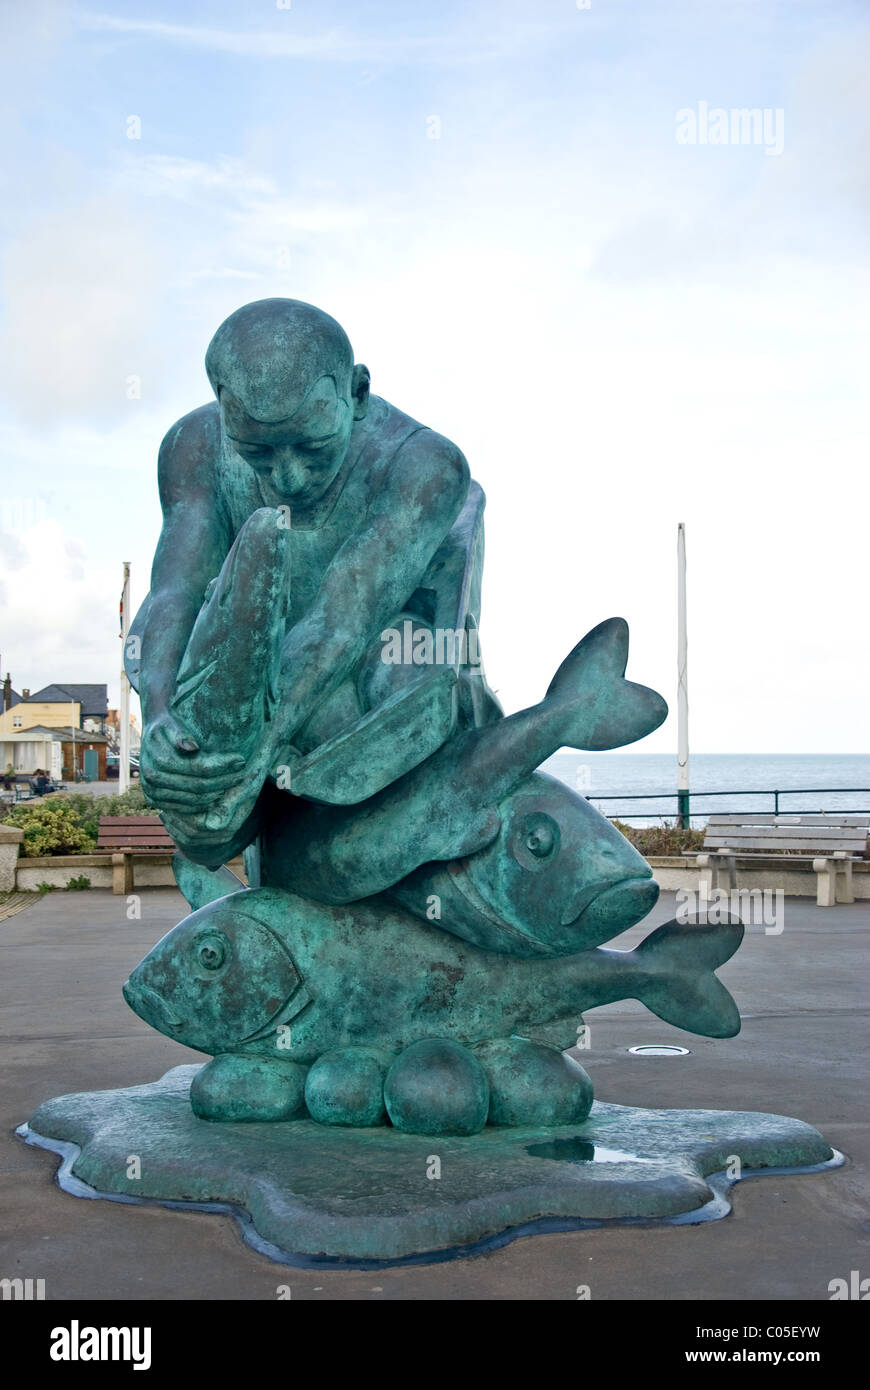 https://c8.alamy.com/comp/C05EYW/metal-statue-of-man-and-fish-C05EYW.jpg